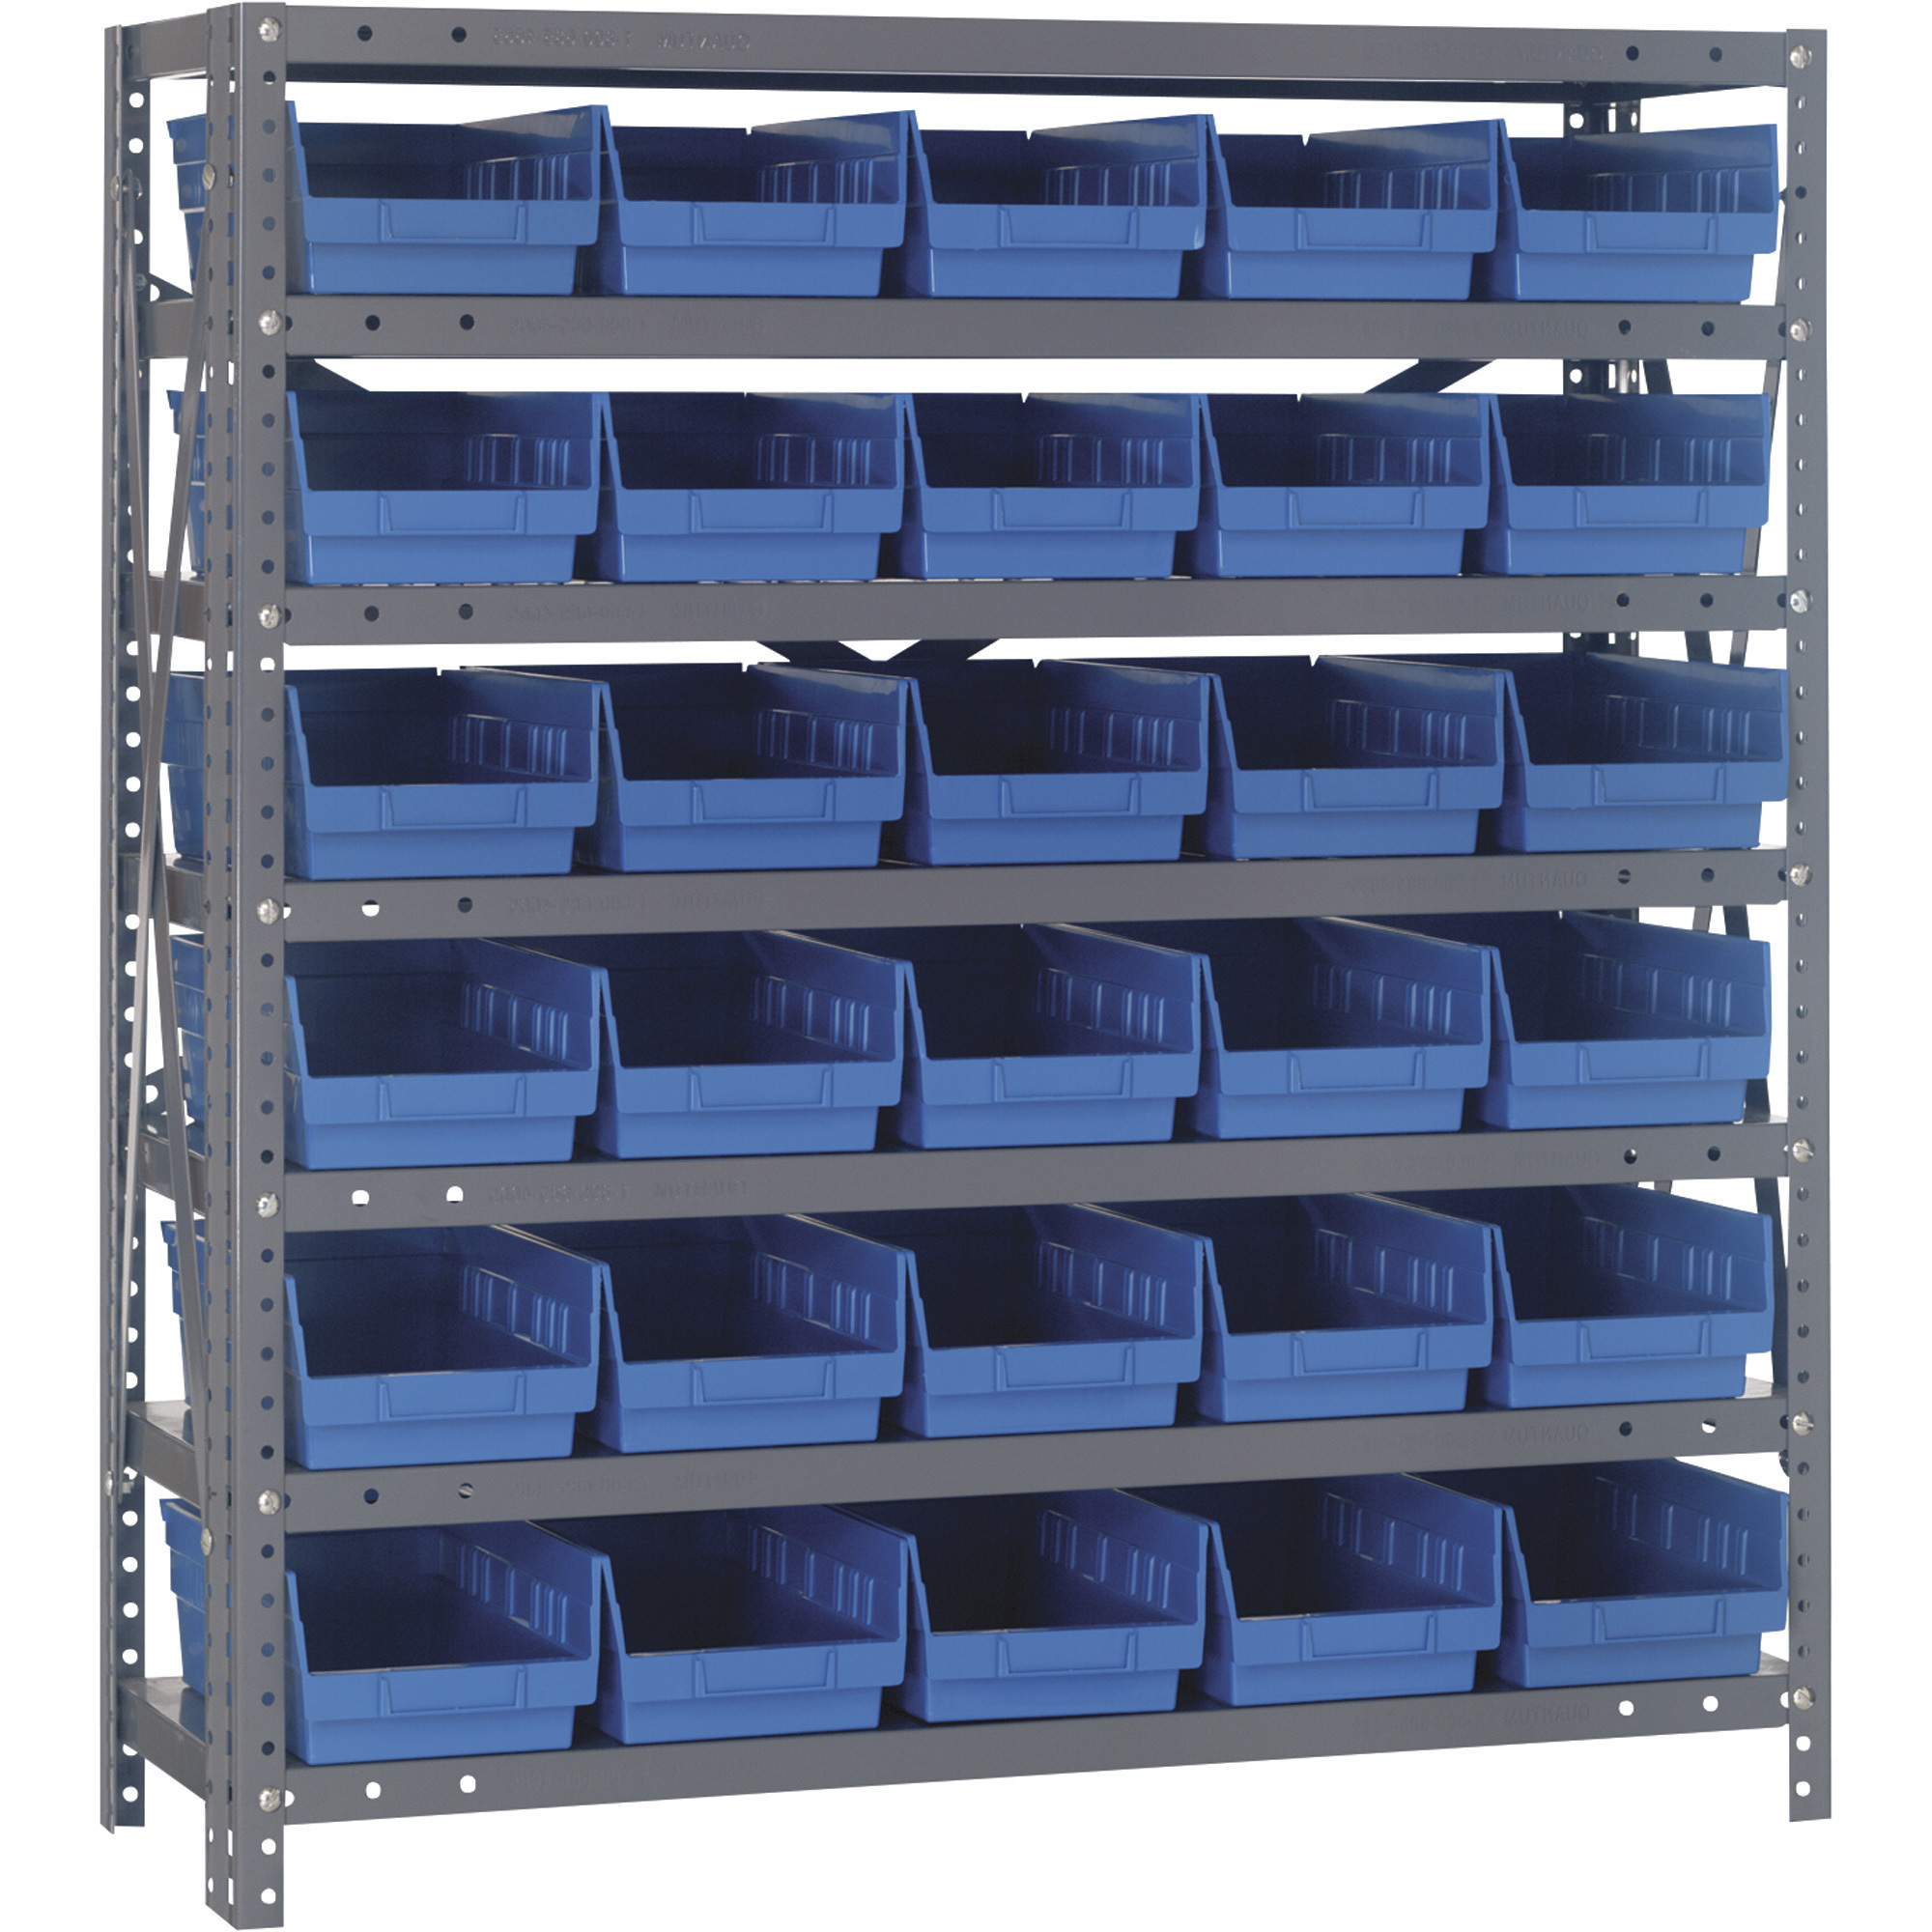 Quantum Storage Single Sided Steel Shelving Unit with 30 Bins, 36Inch W x 12Inch D x 39Inch H Rack Size, Blue, Model 1239-102BL